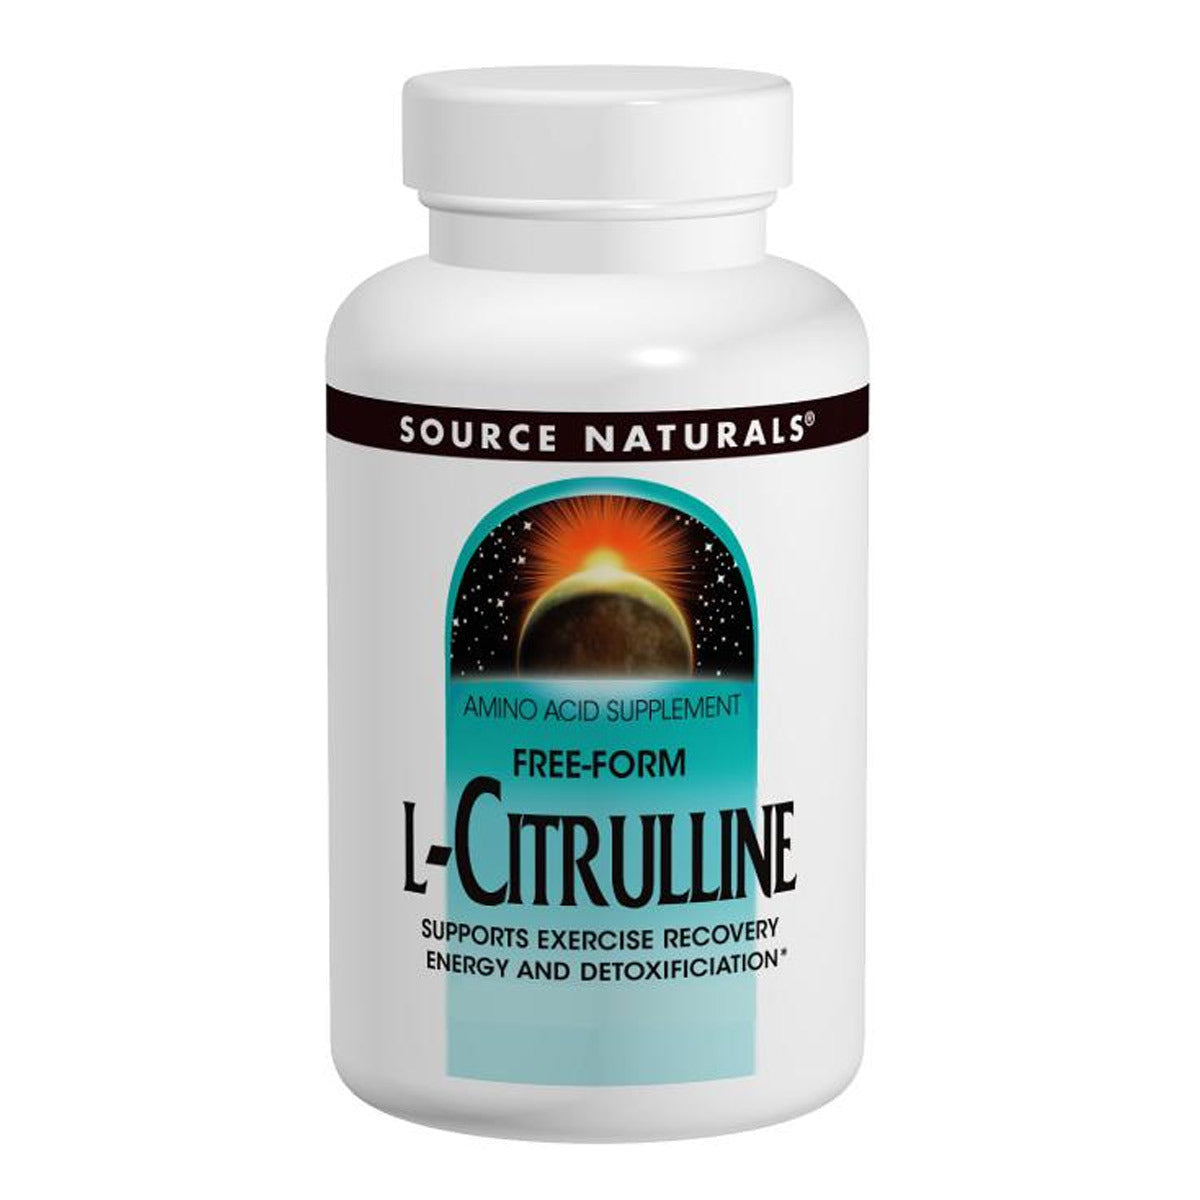 Primary image of L-Citrulline Free-Form